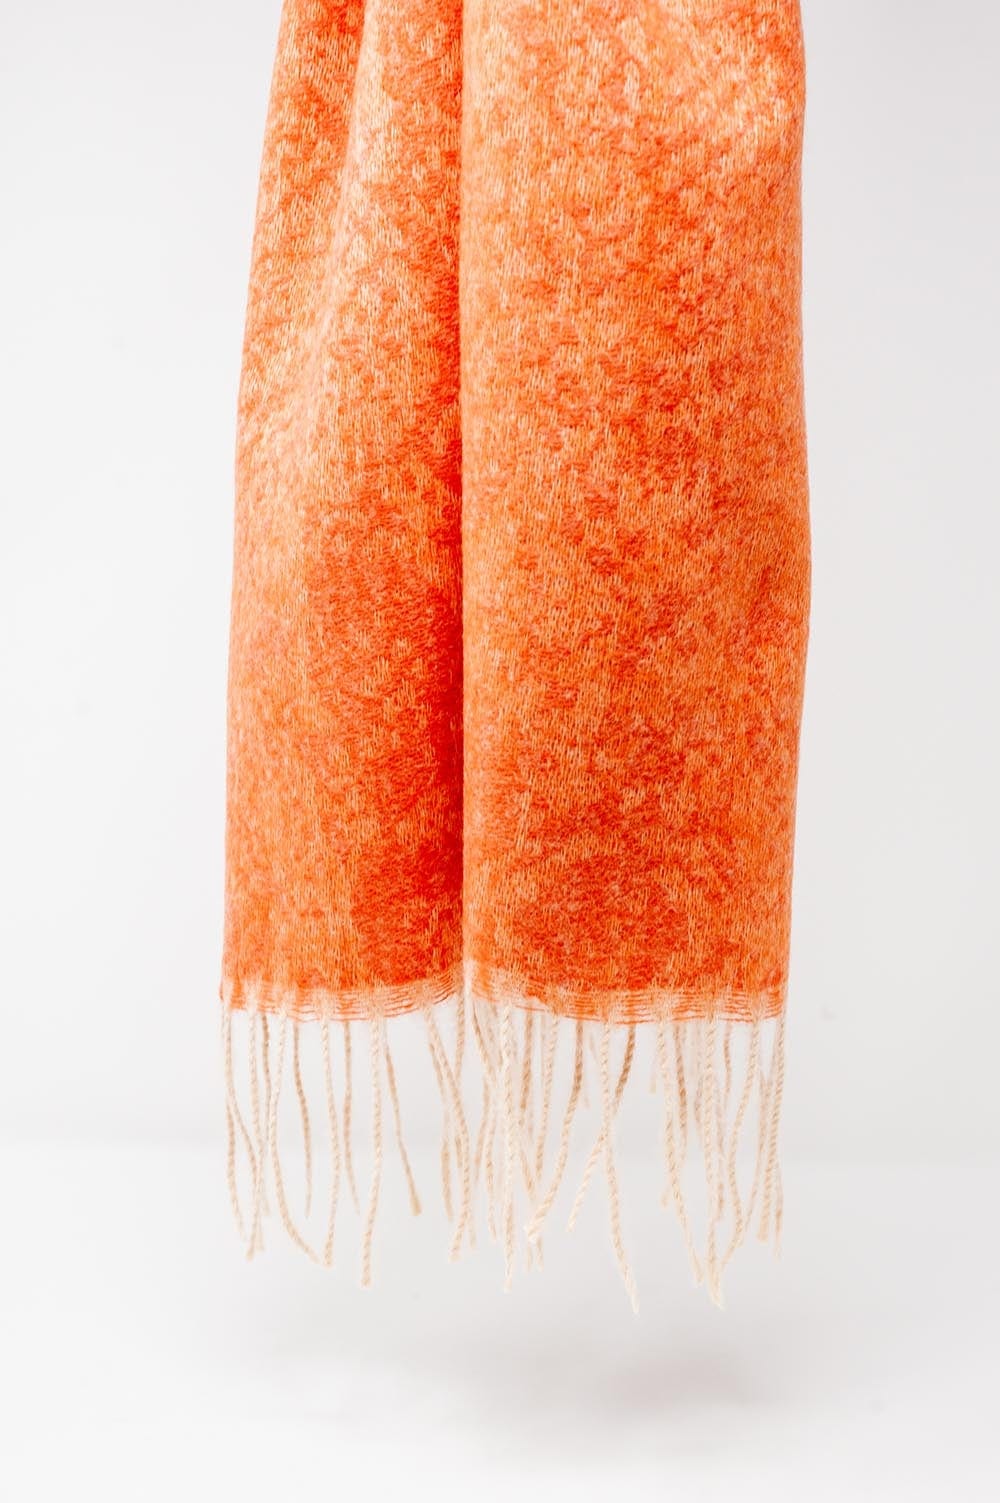 Q2 Women's Scarves, Wraps, & Gloves One Size / Orange / China Orange Snake Print Scarf with Bangs